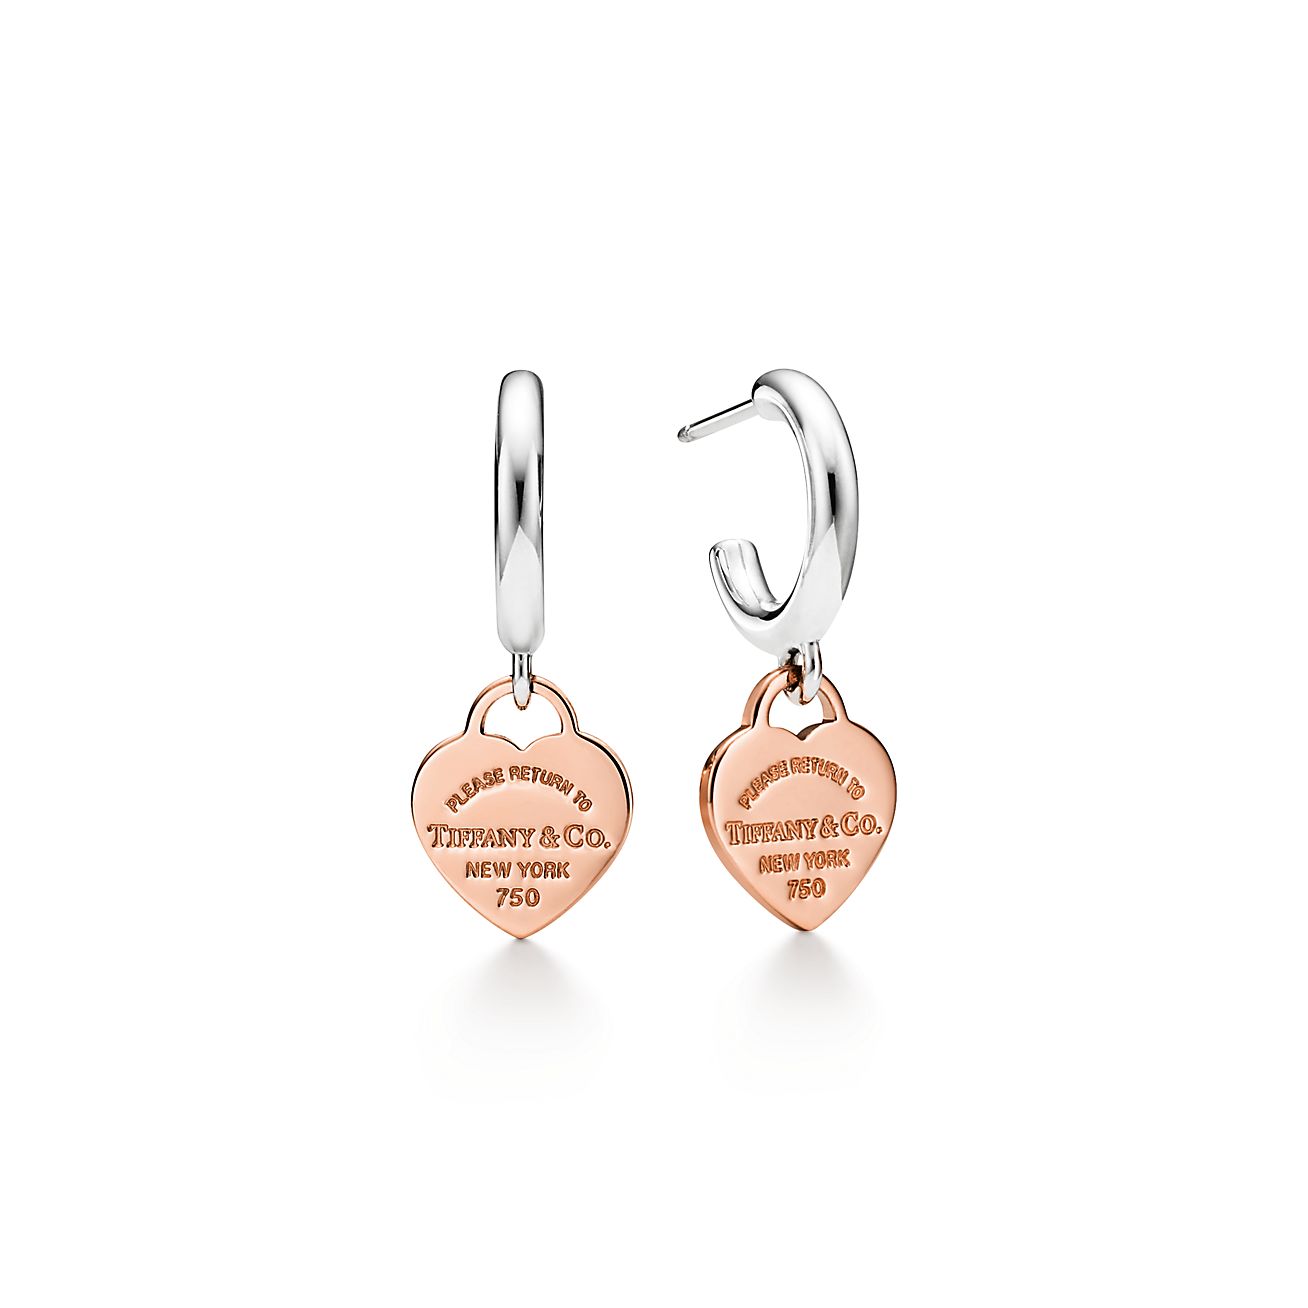 Buy Cheap Tiffany Rings & earrings #9999926181 from AAAClothing.is